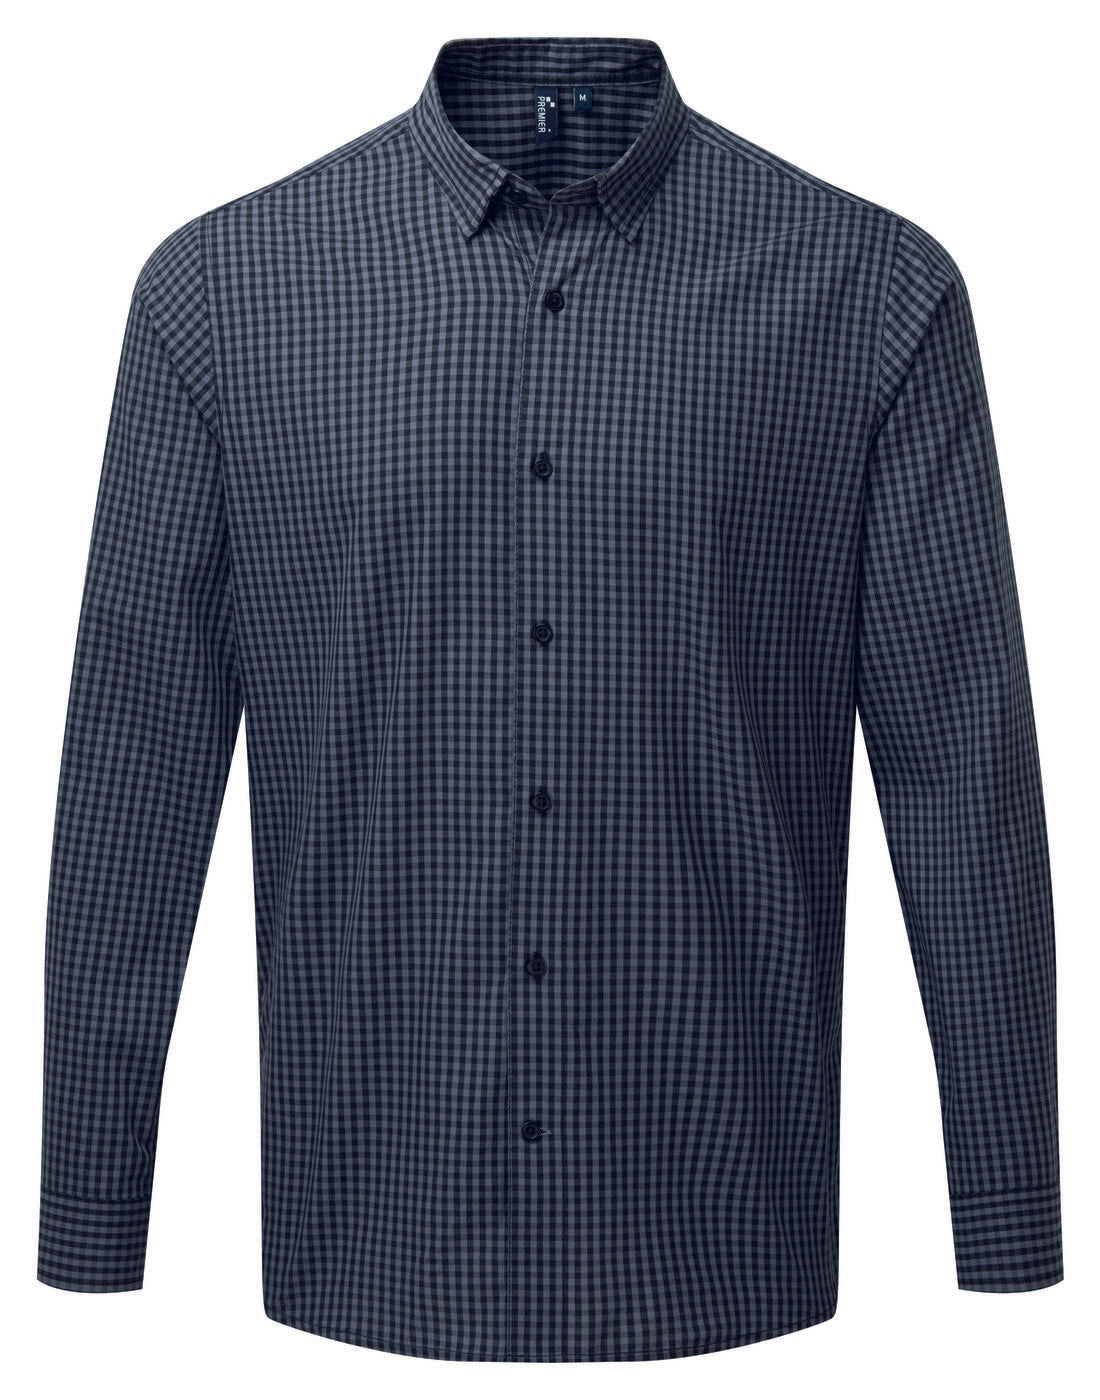 Premier 'Maxton' Check - Men's Long Sleeve Shirt